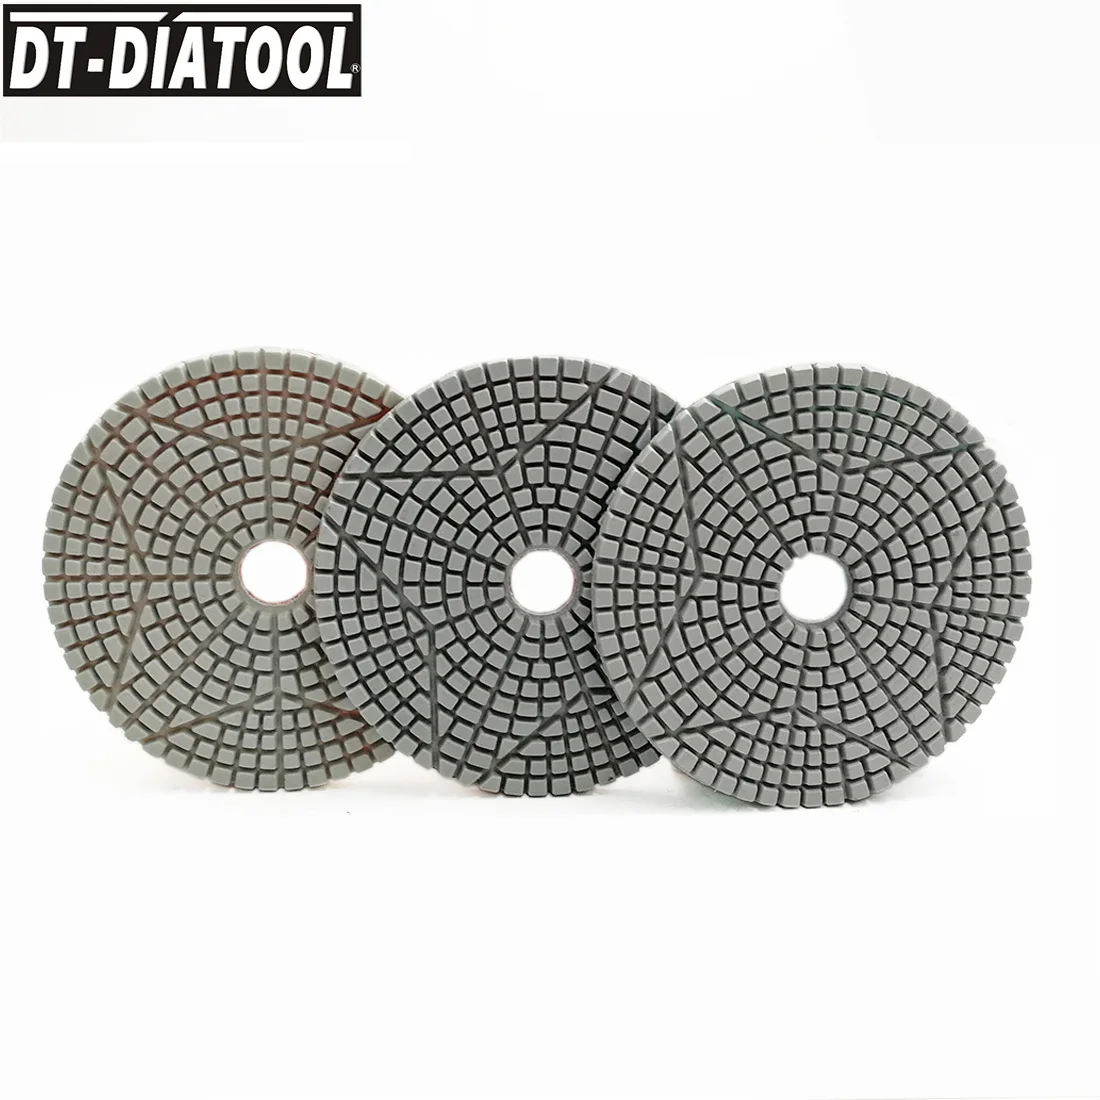 

DT-DIATOOL Dia 100mm/4" 3 Steps Wet Diamond Polishing Pads Resin Bond Sanding Discs Premium high quality For marble Polisher